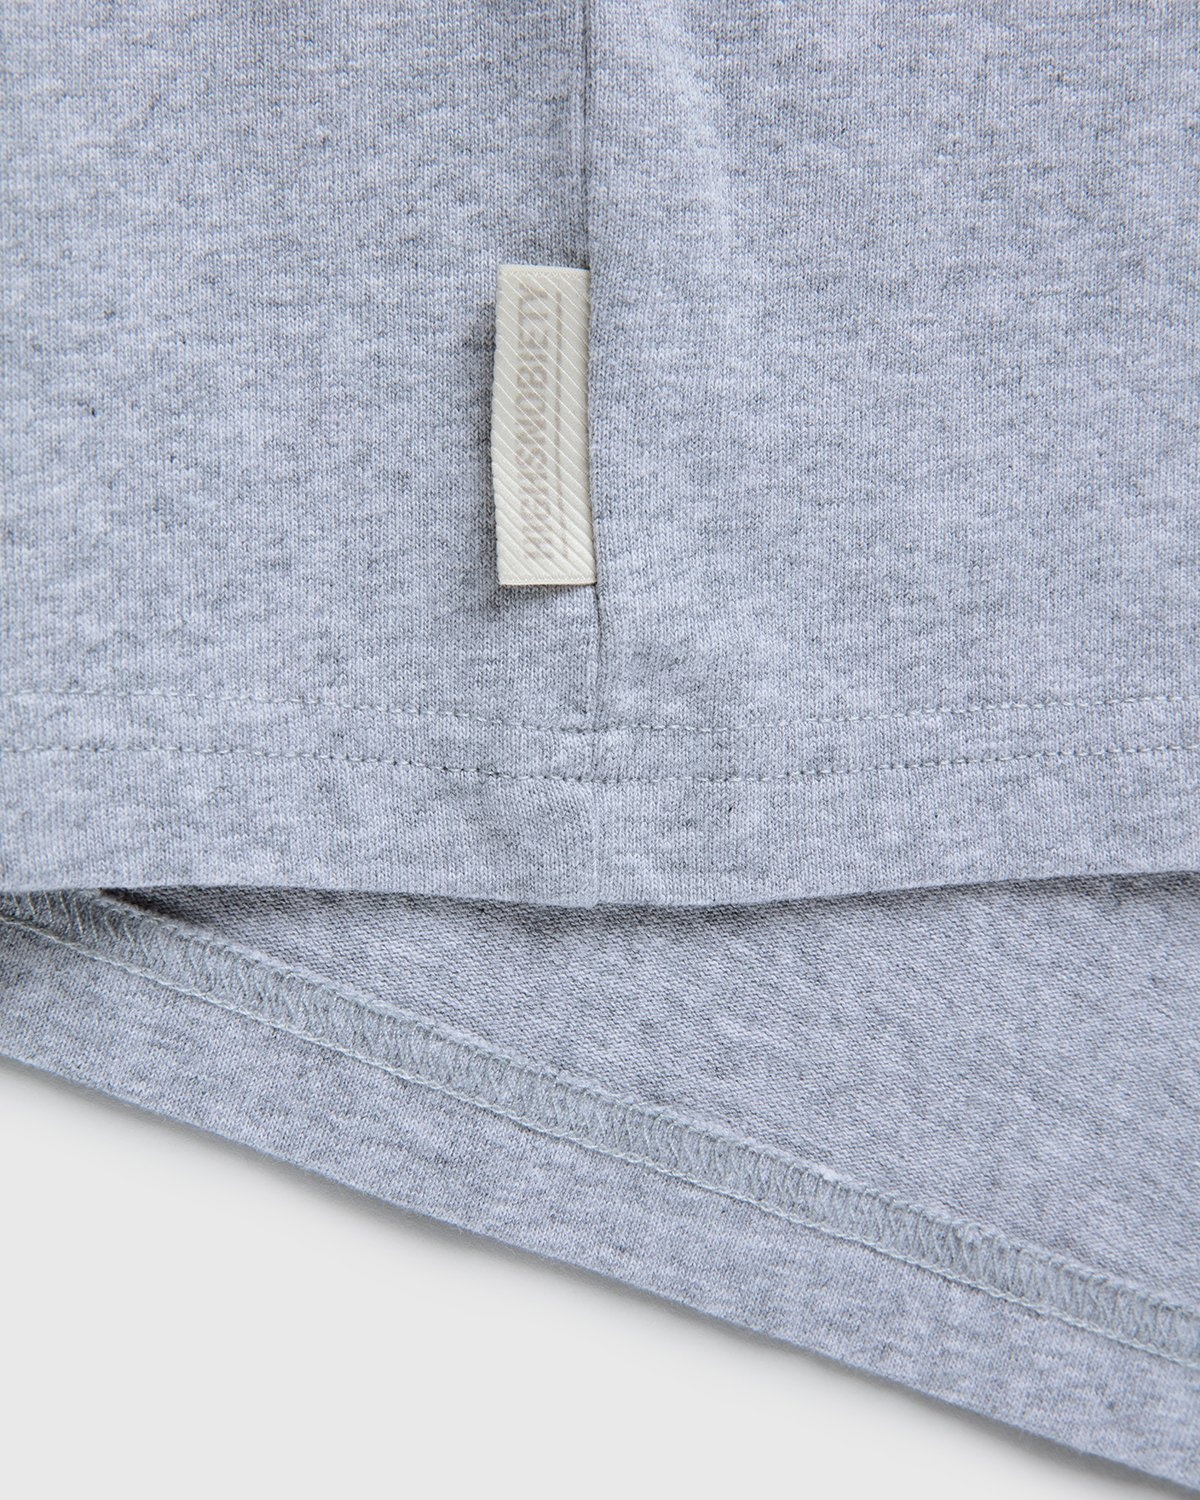 Highsnobiety – T-Shirt Grey - T-shirts - Grey - Image 4